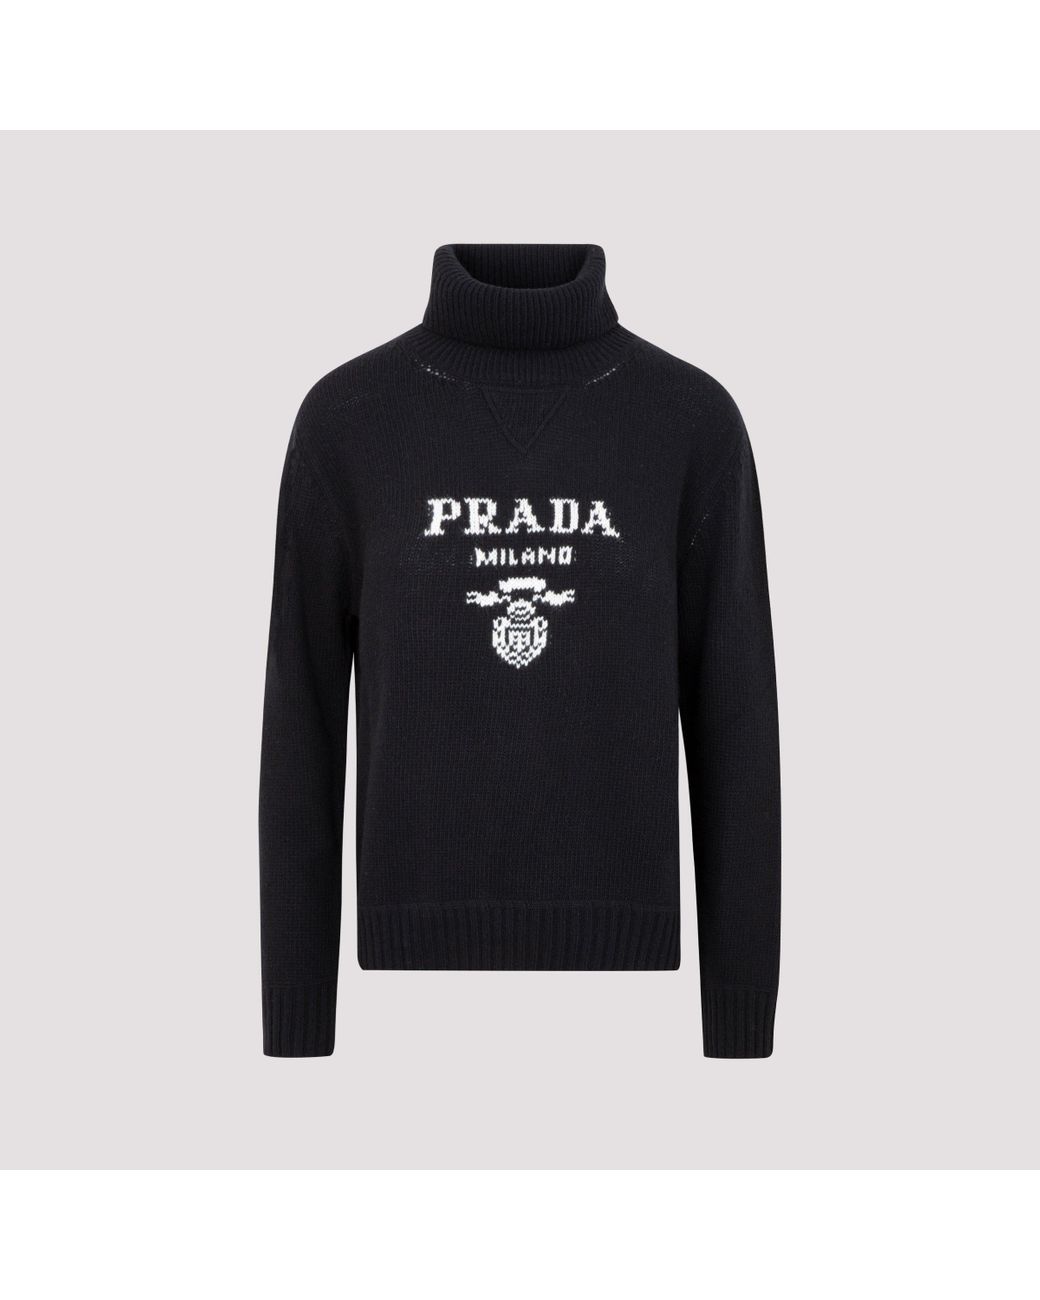 Prada Wool Logo Intarsia Turtleneck Sweater in Black - Lyst